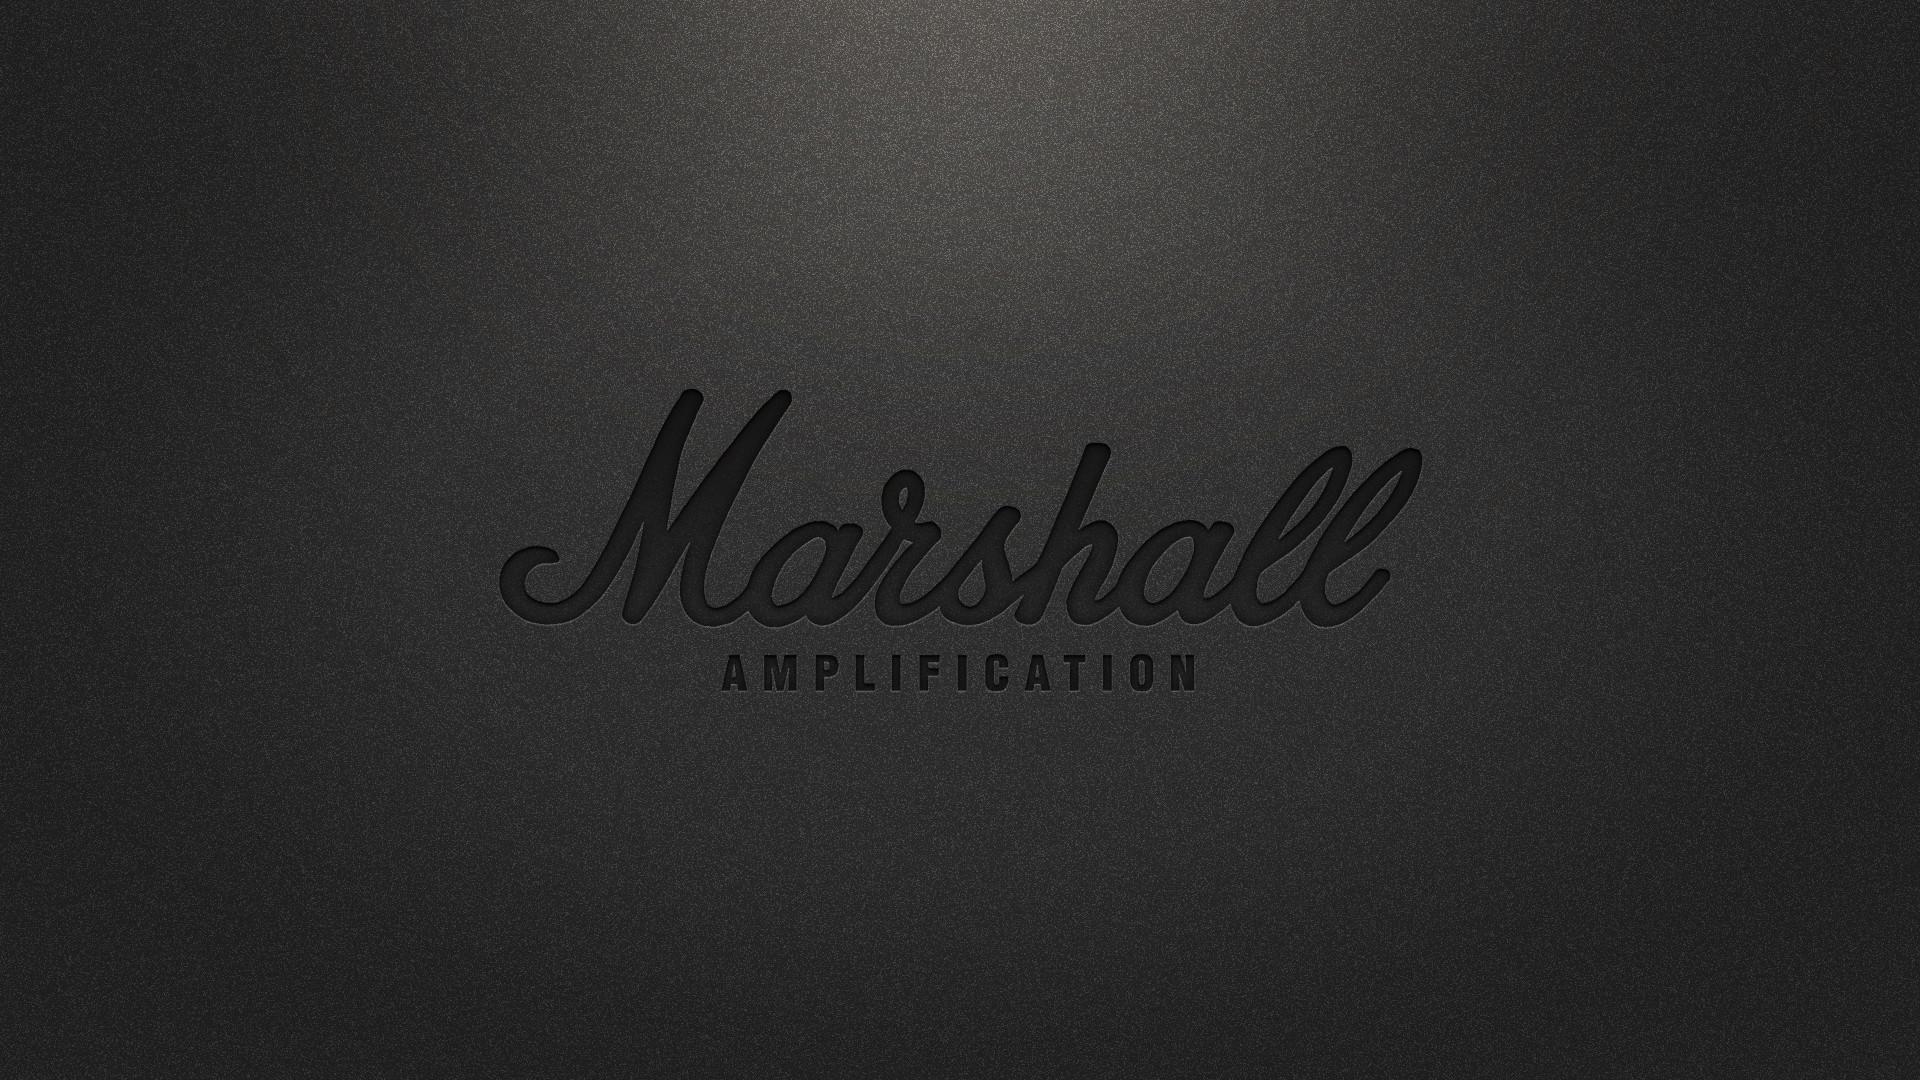 Marshall Amps Wallpaper